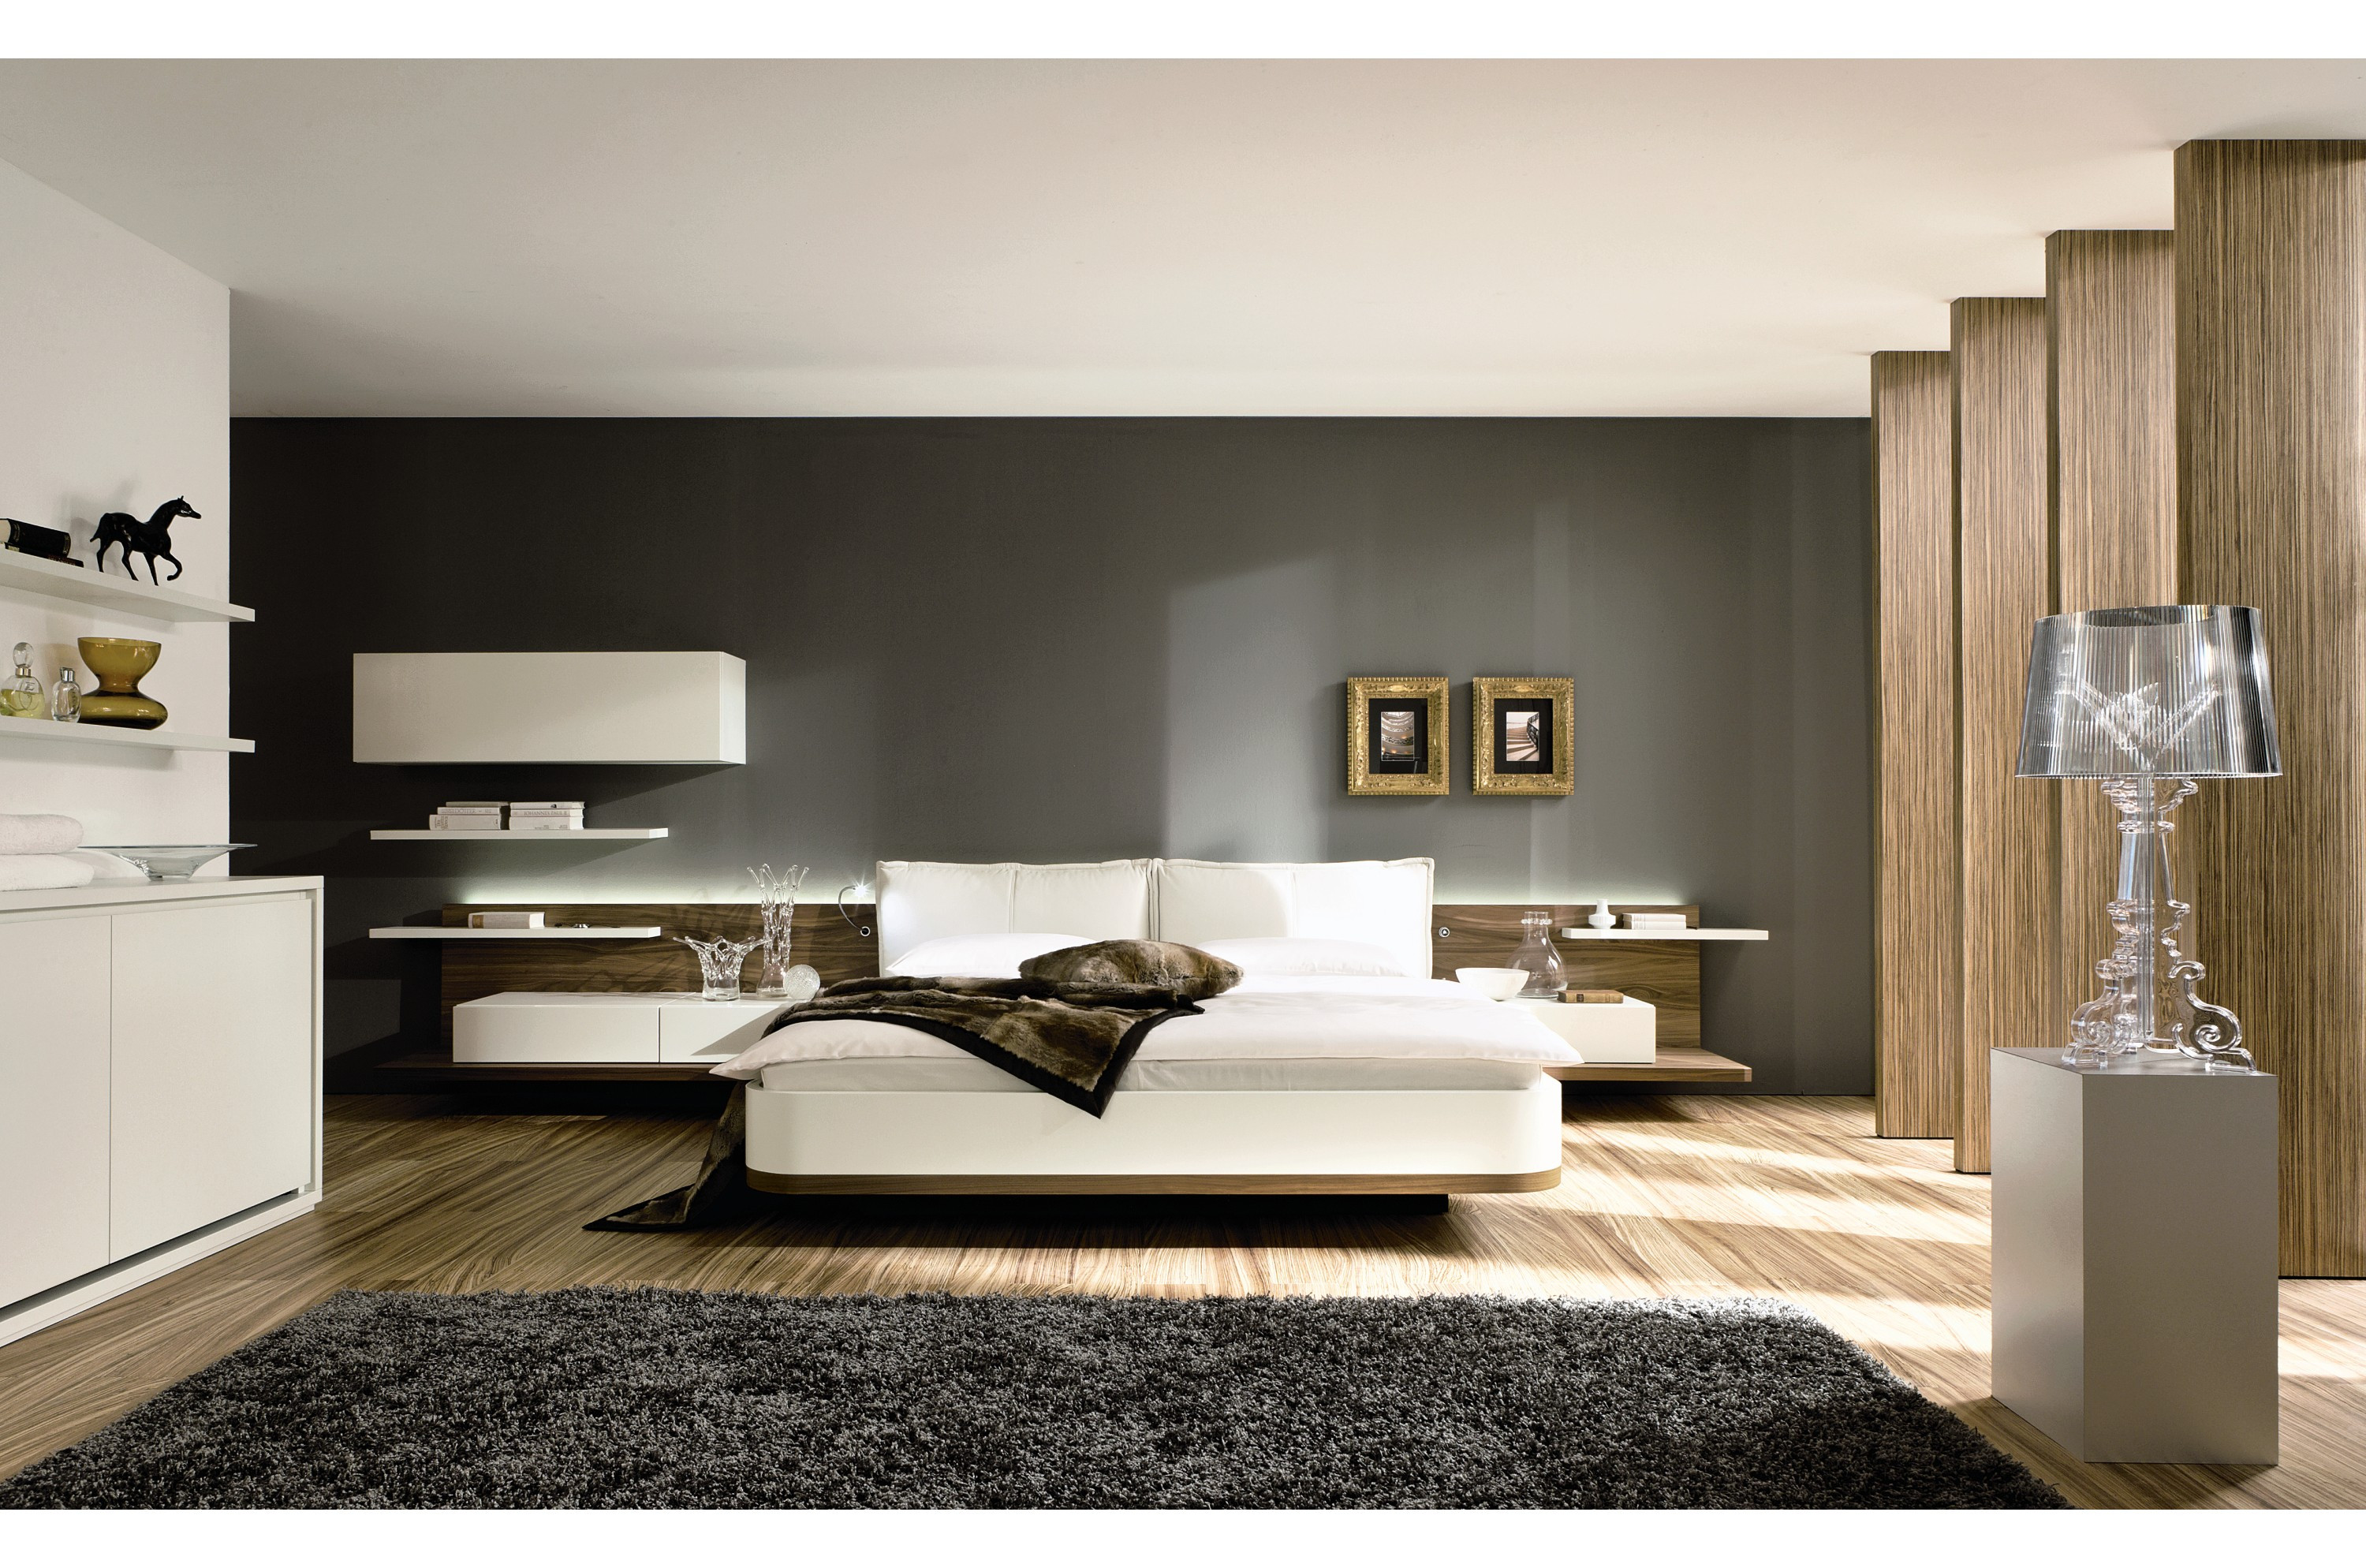 Best ideas about Interior Design Bedroom
. Save or Pin Modern Bedroom Innovation Bedroom Ideas Interior Design Now.